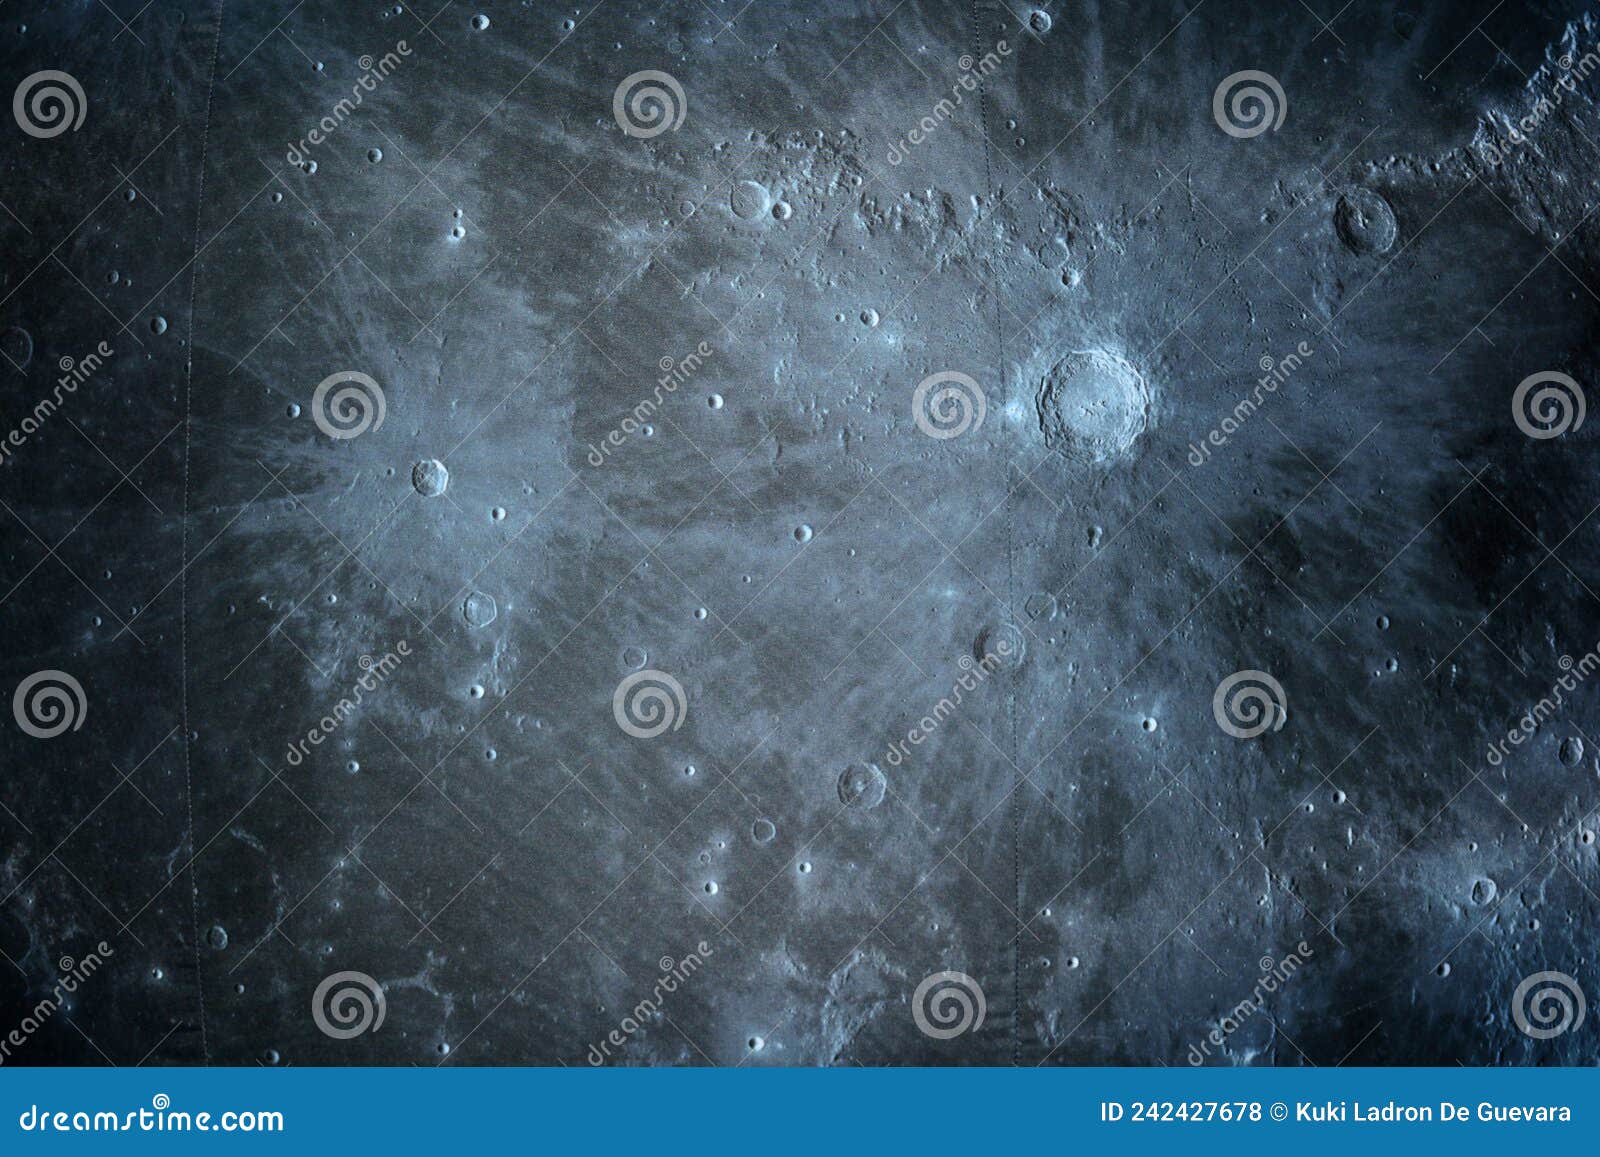 moon surface texture close up